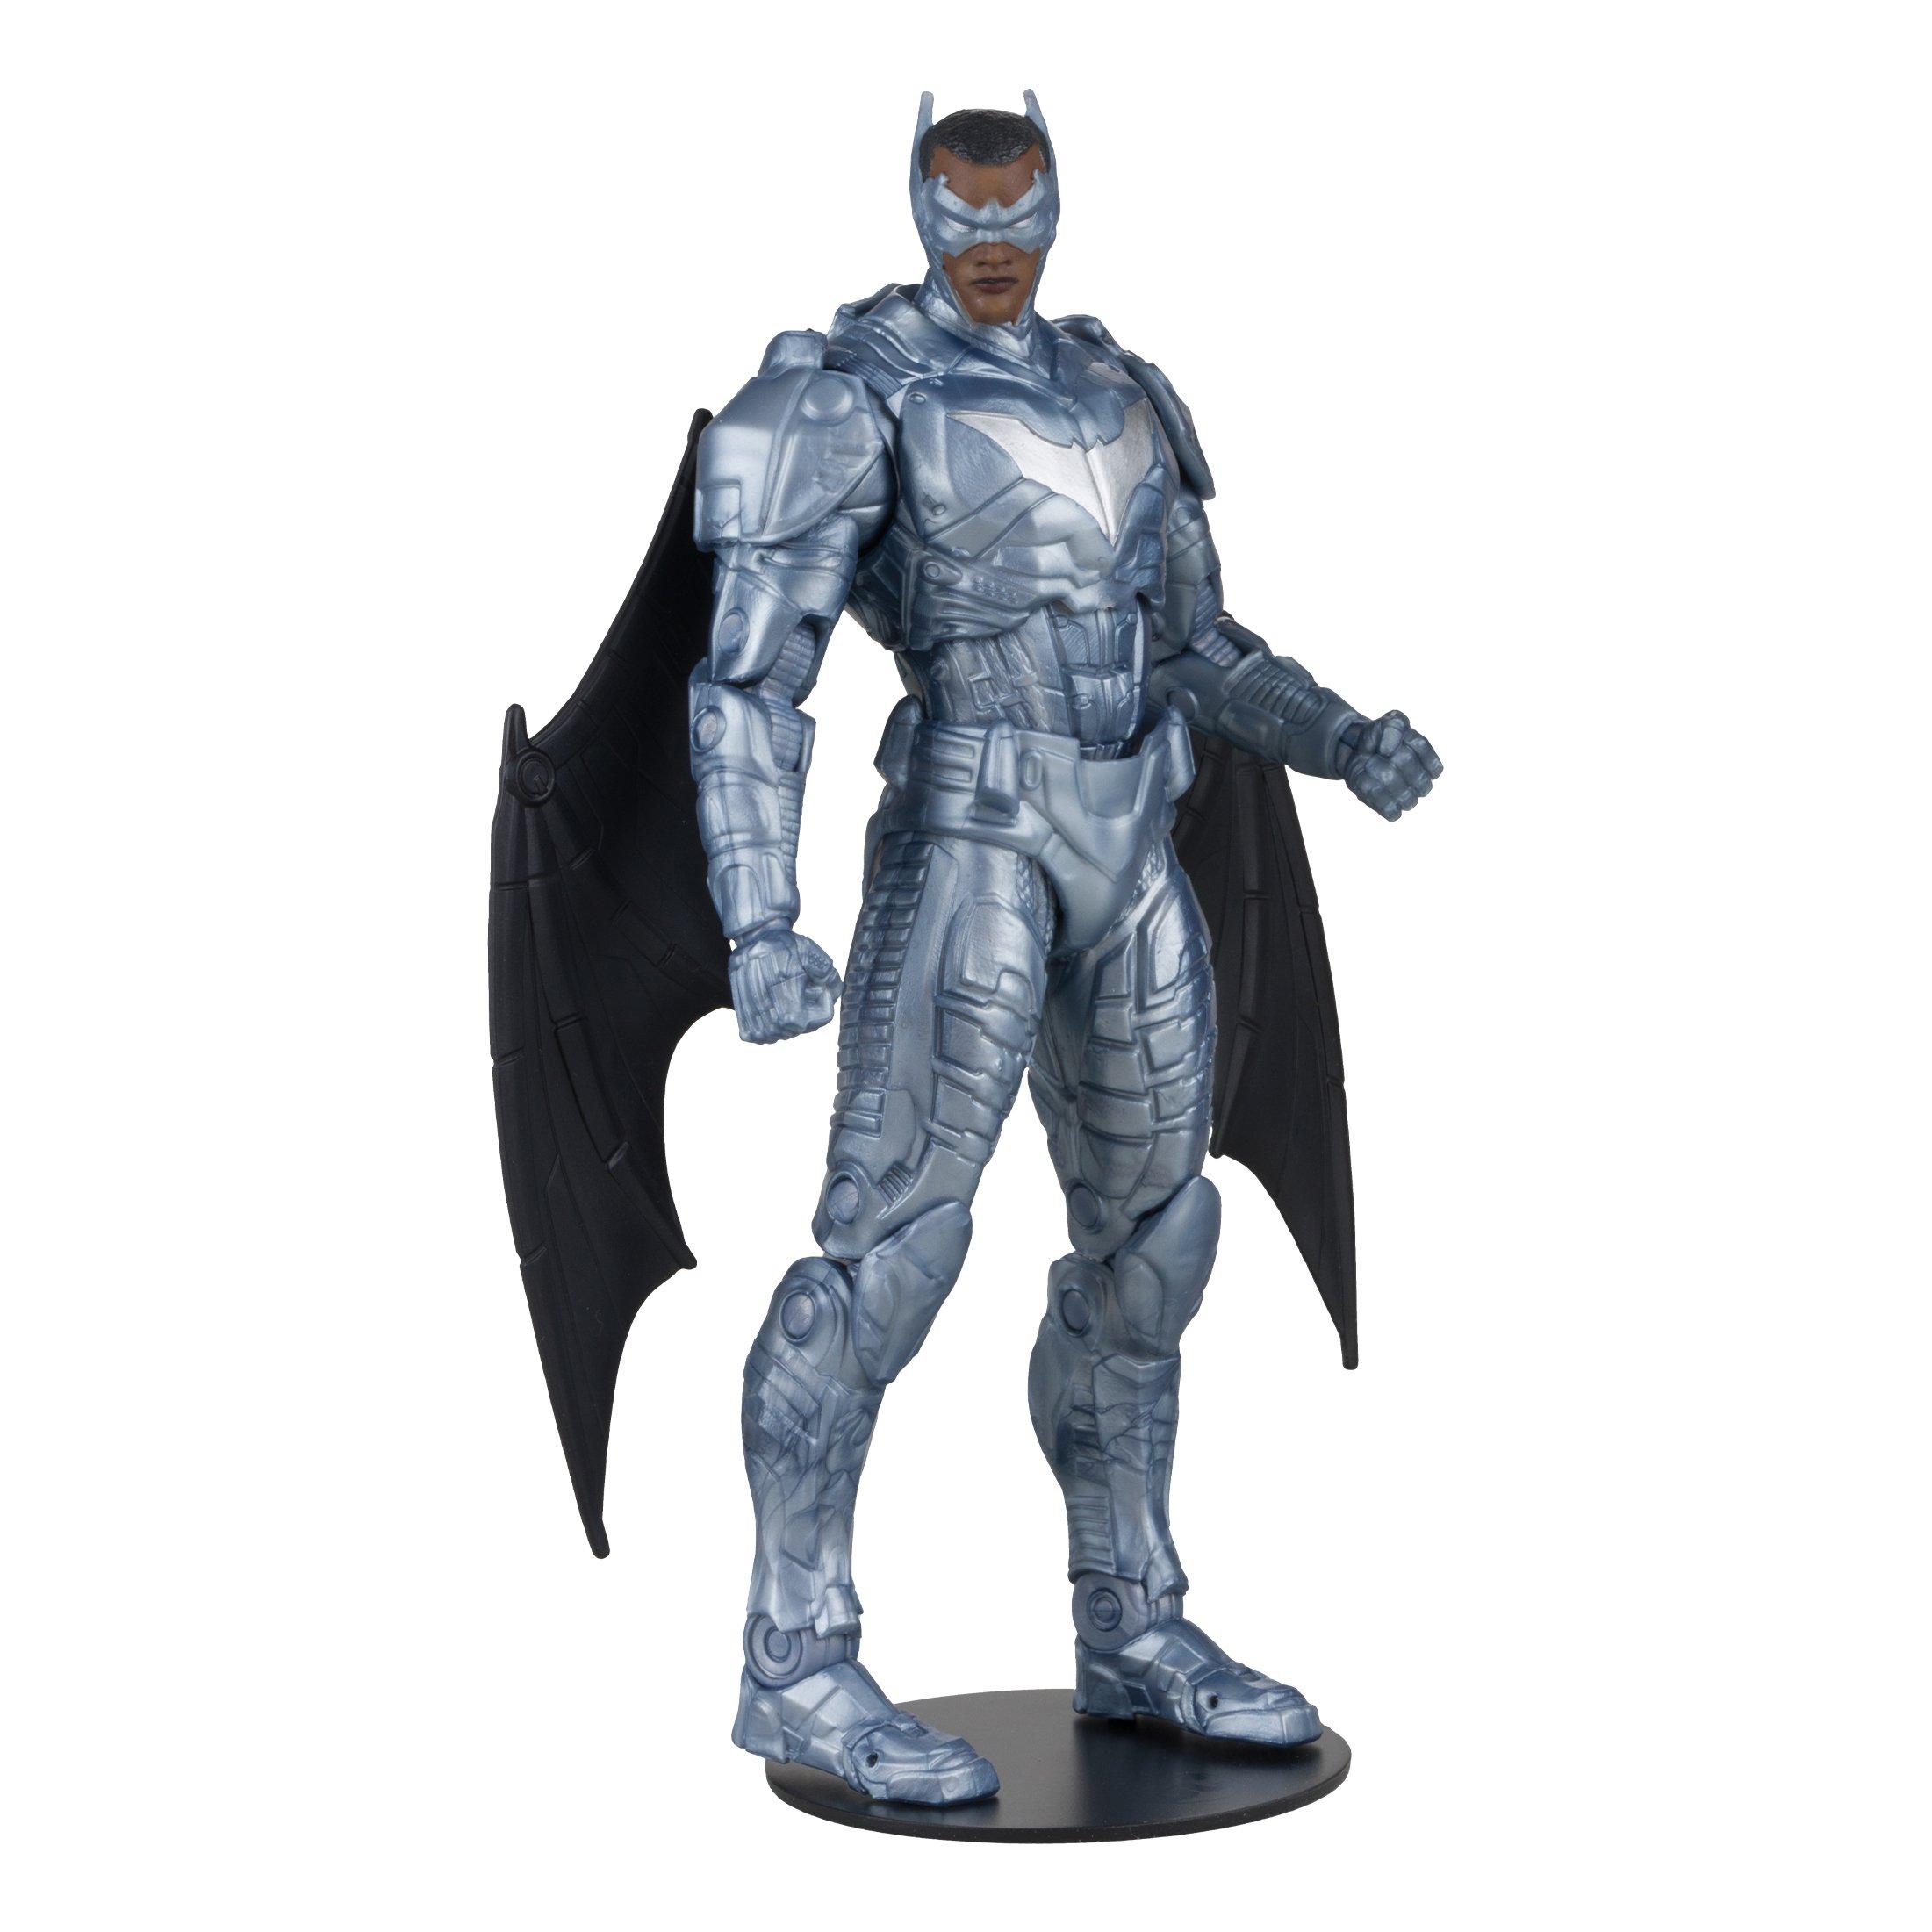 McFarlane Toys DC Multiverse Batwing(Batman Inc.) 7-in Action Figure